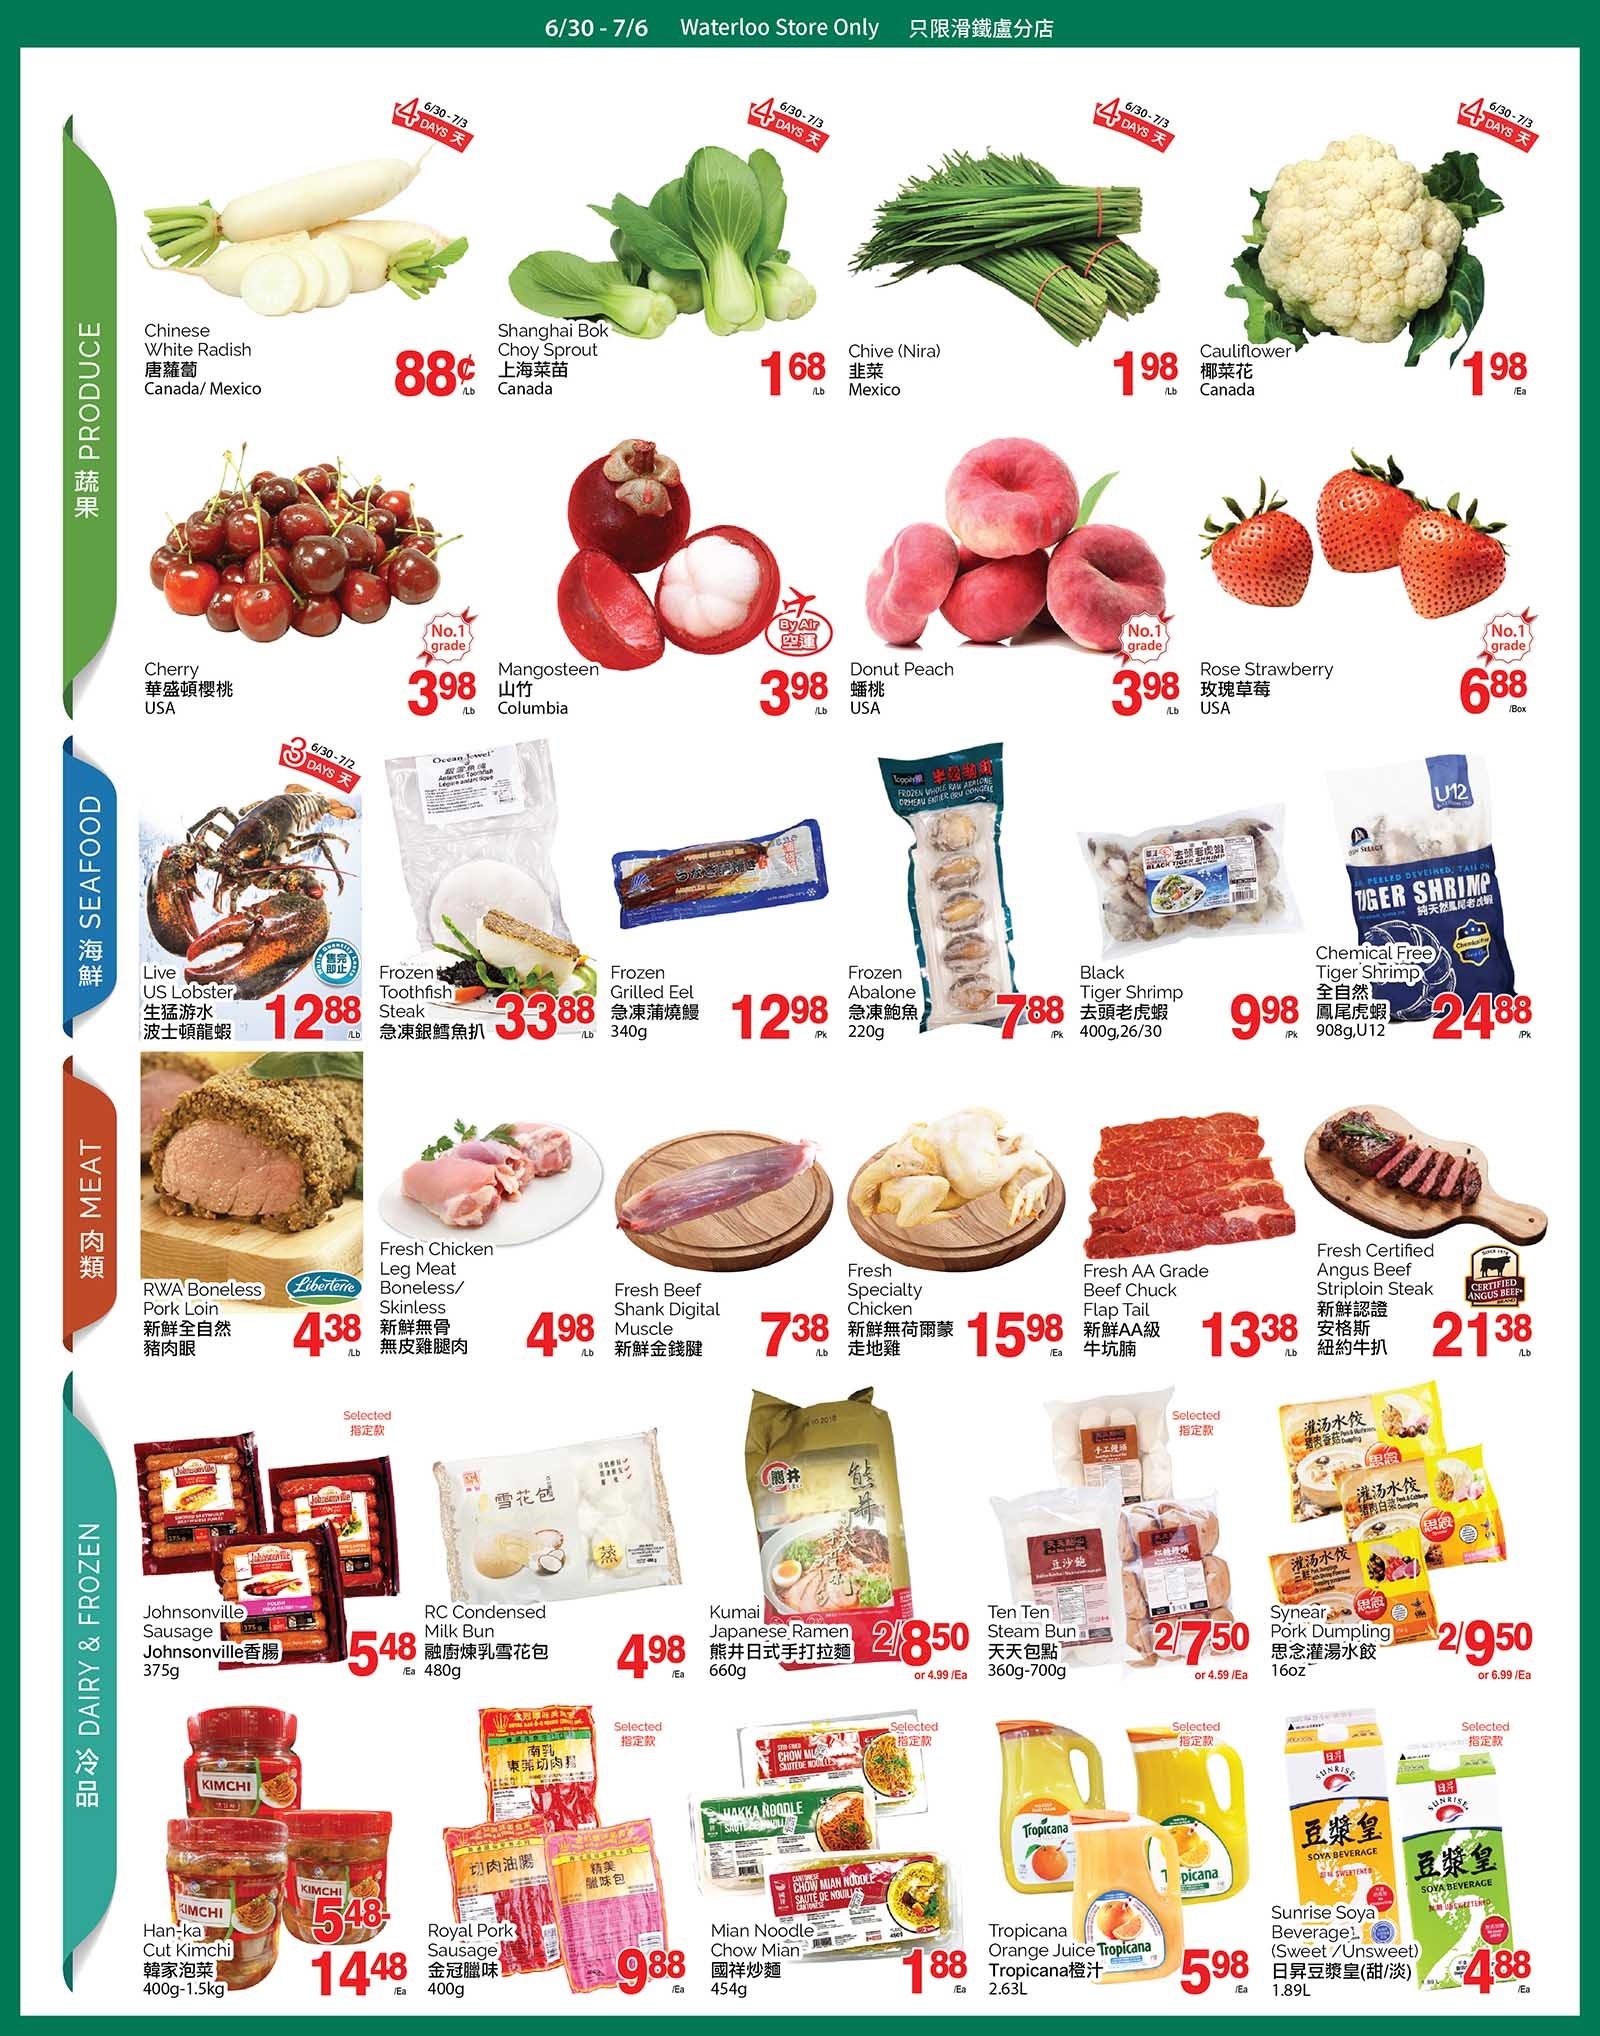 tt-supermarket-waterloo-flyer-june-30-to-july-6-2.jpg